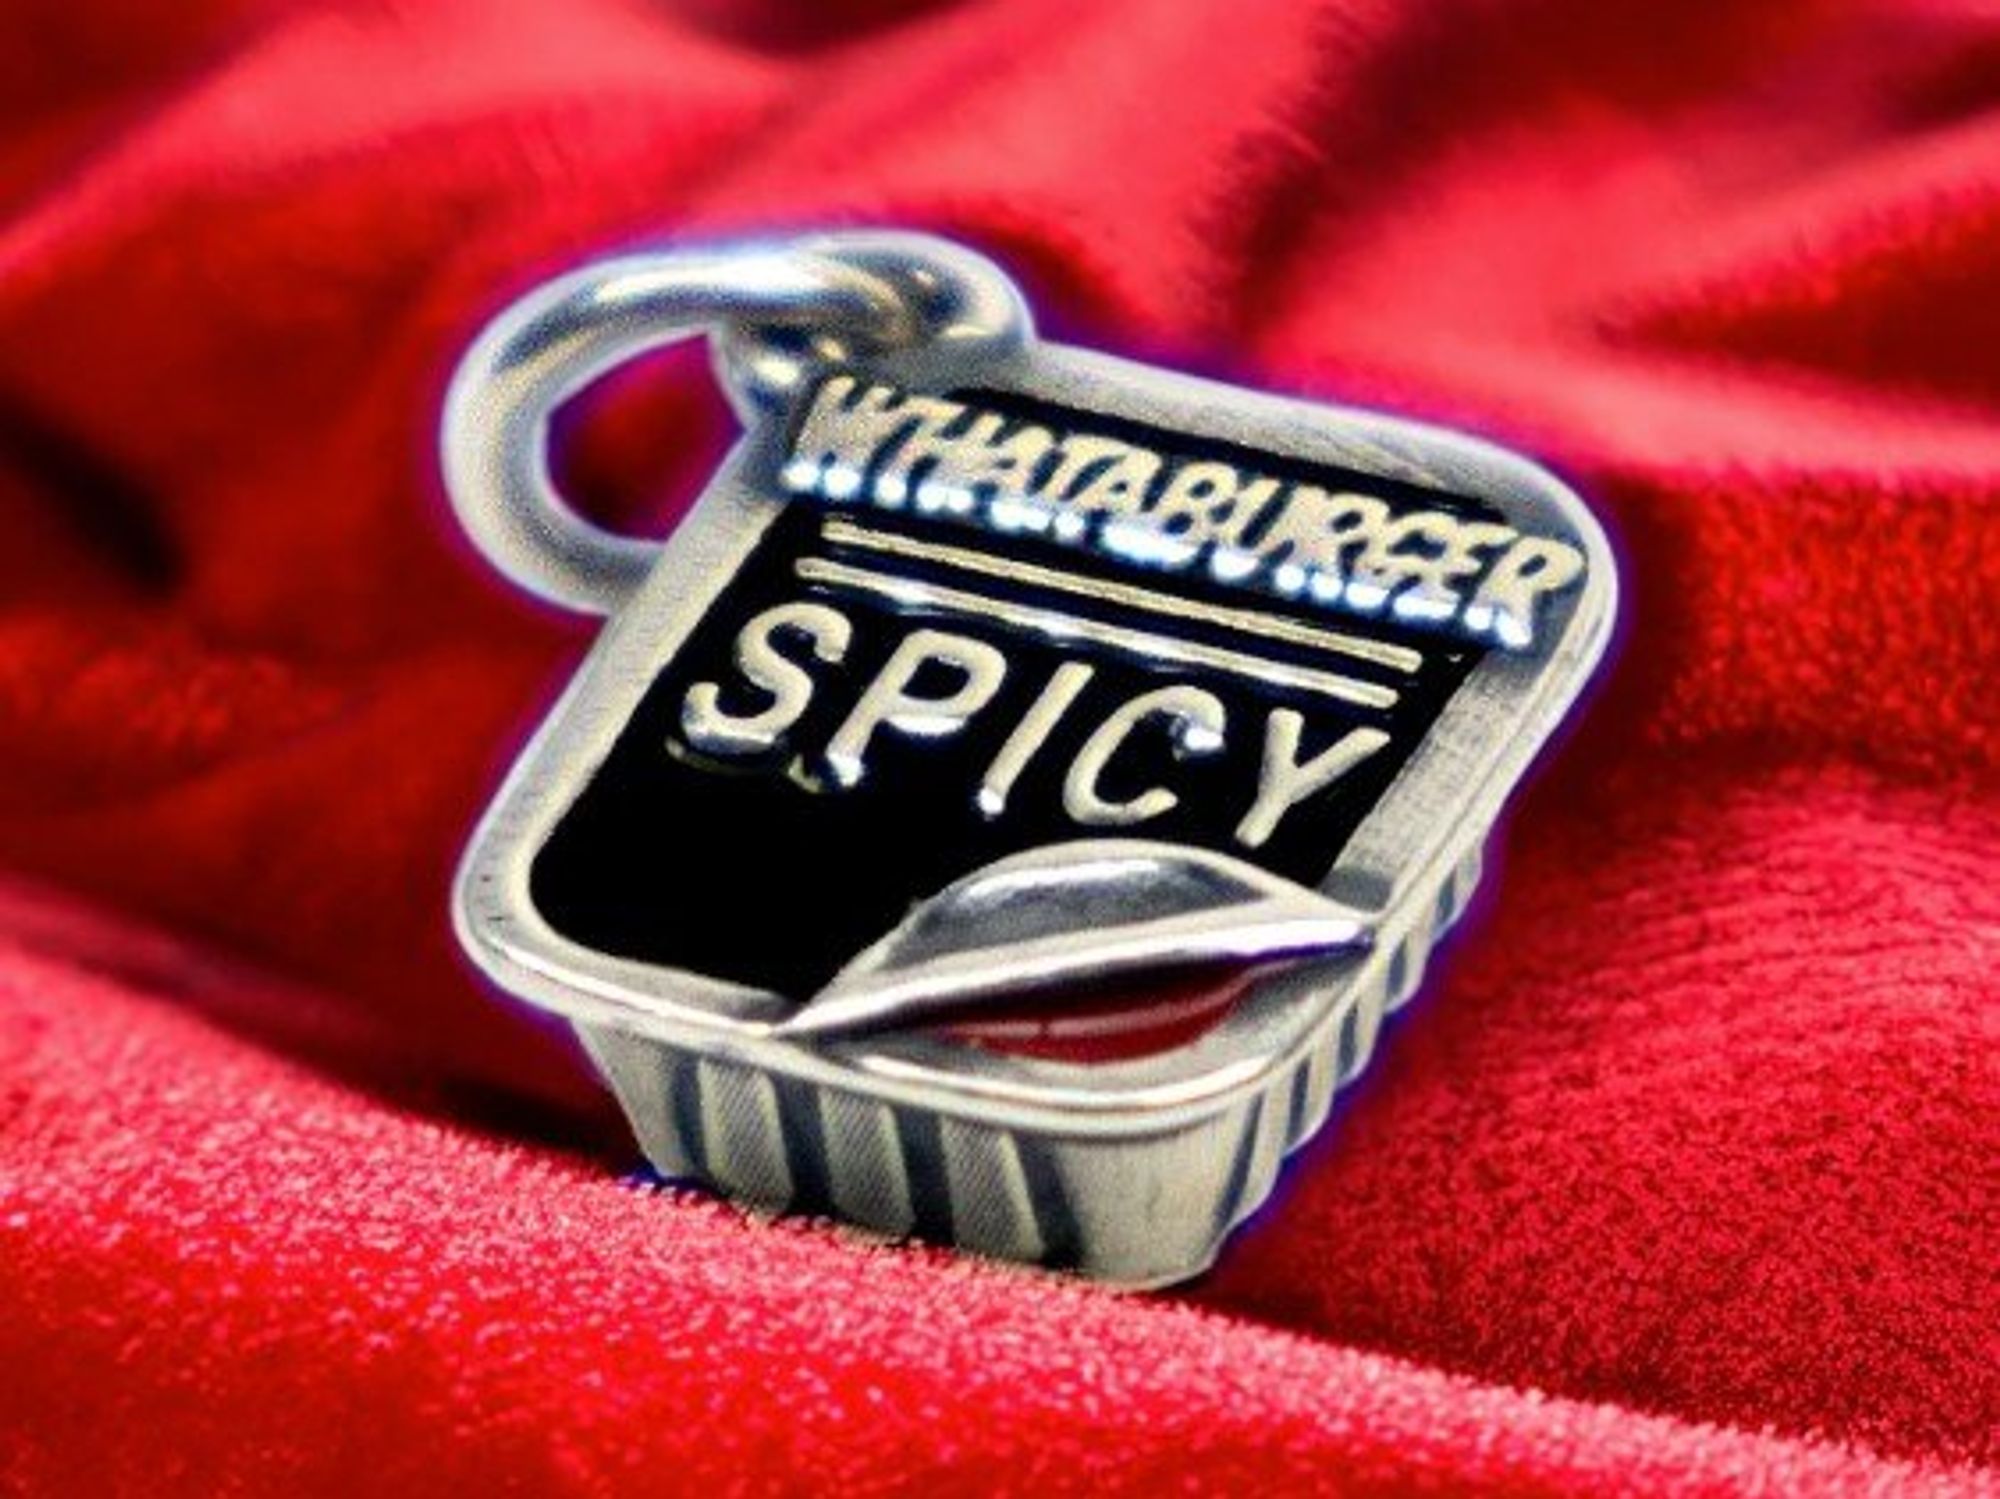 Whataburger spicy charm